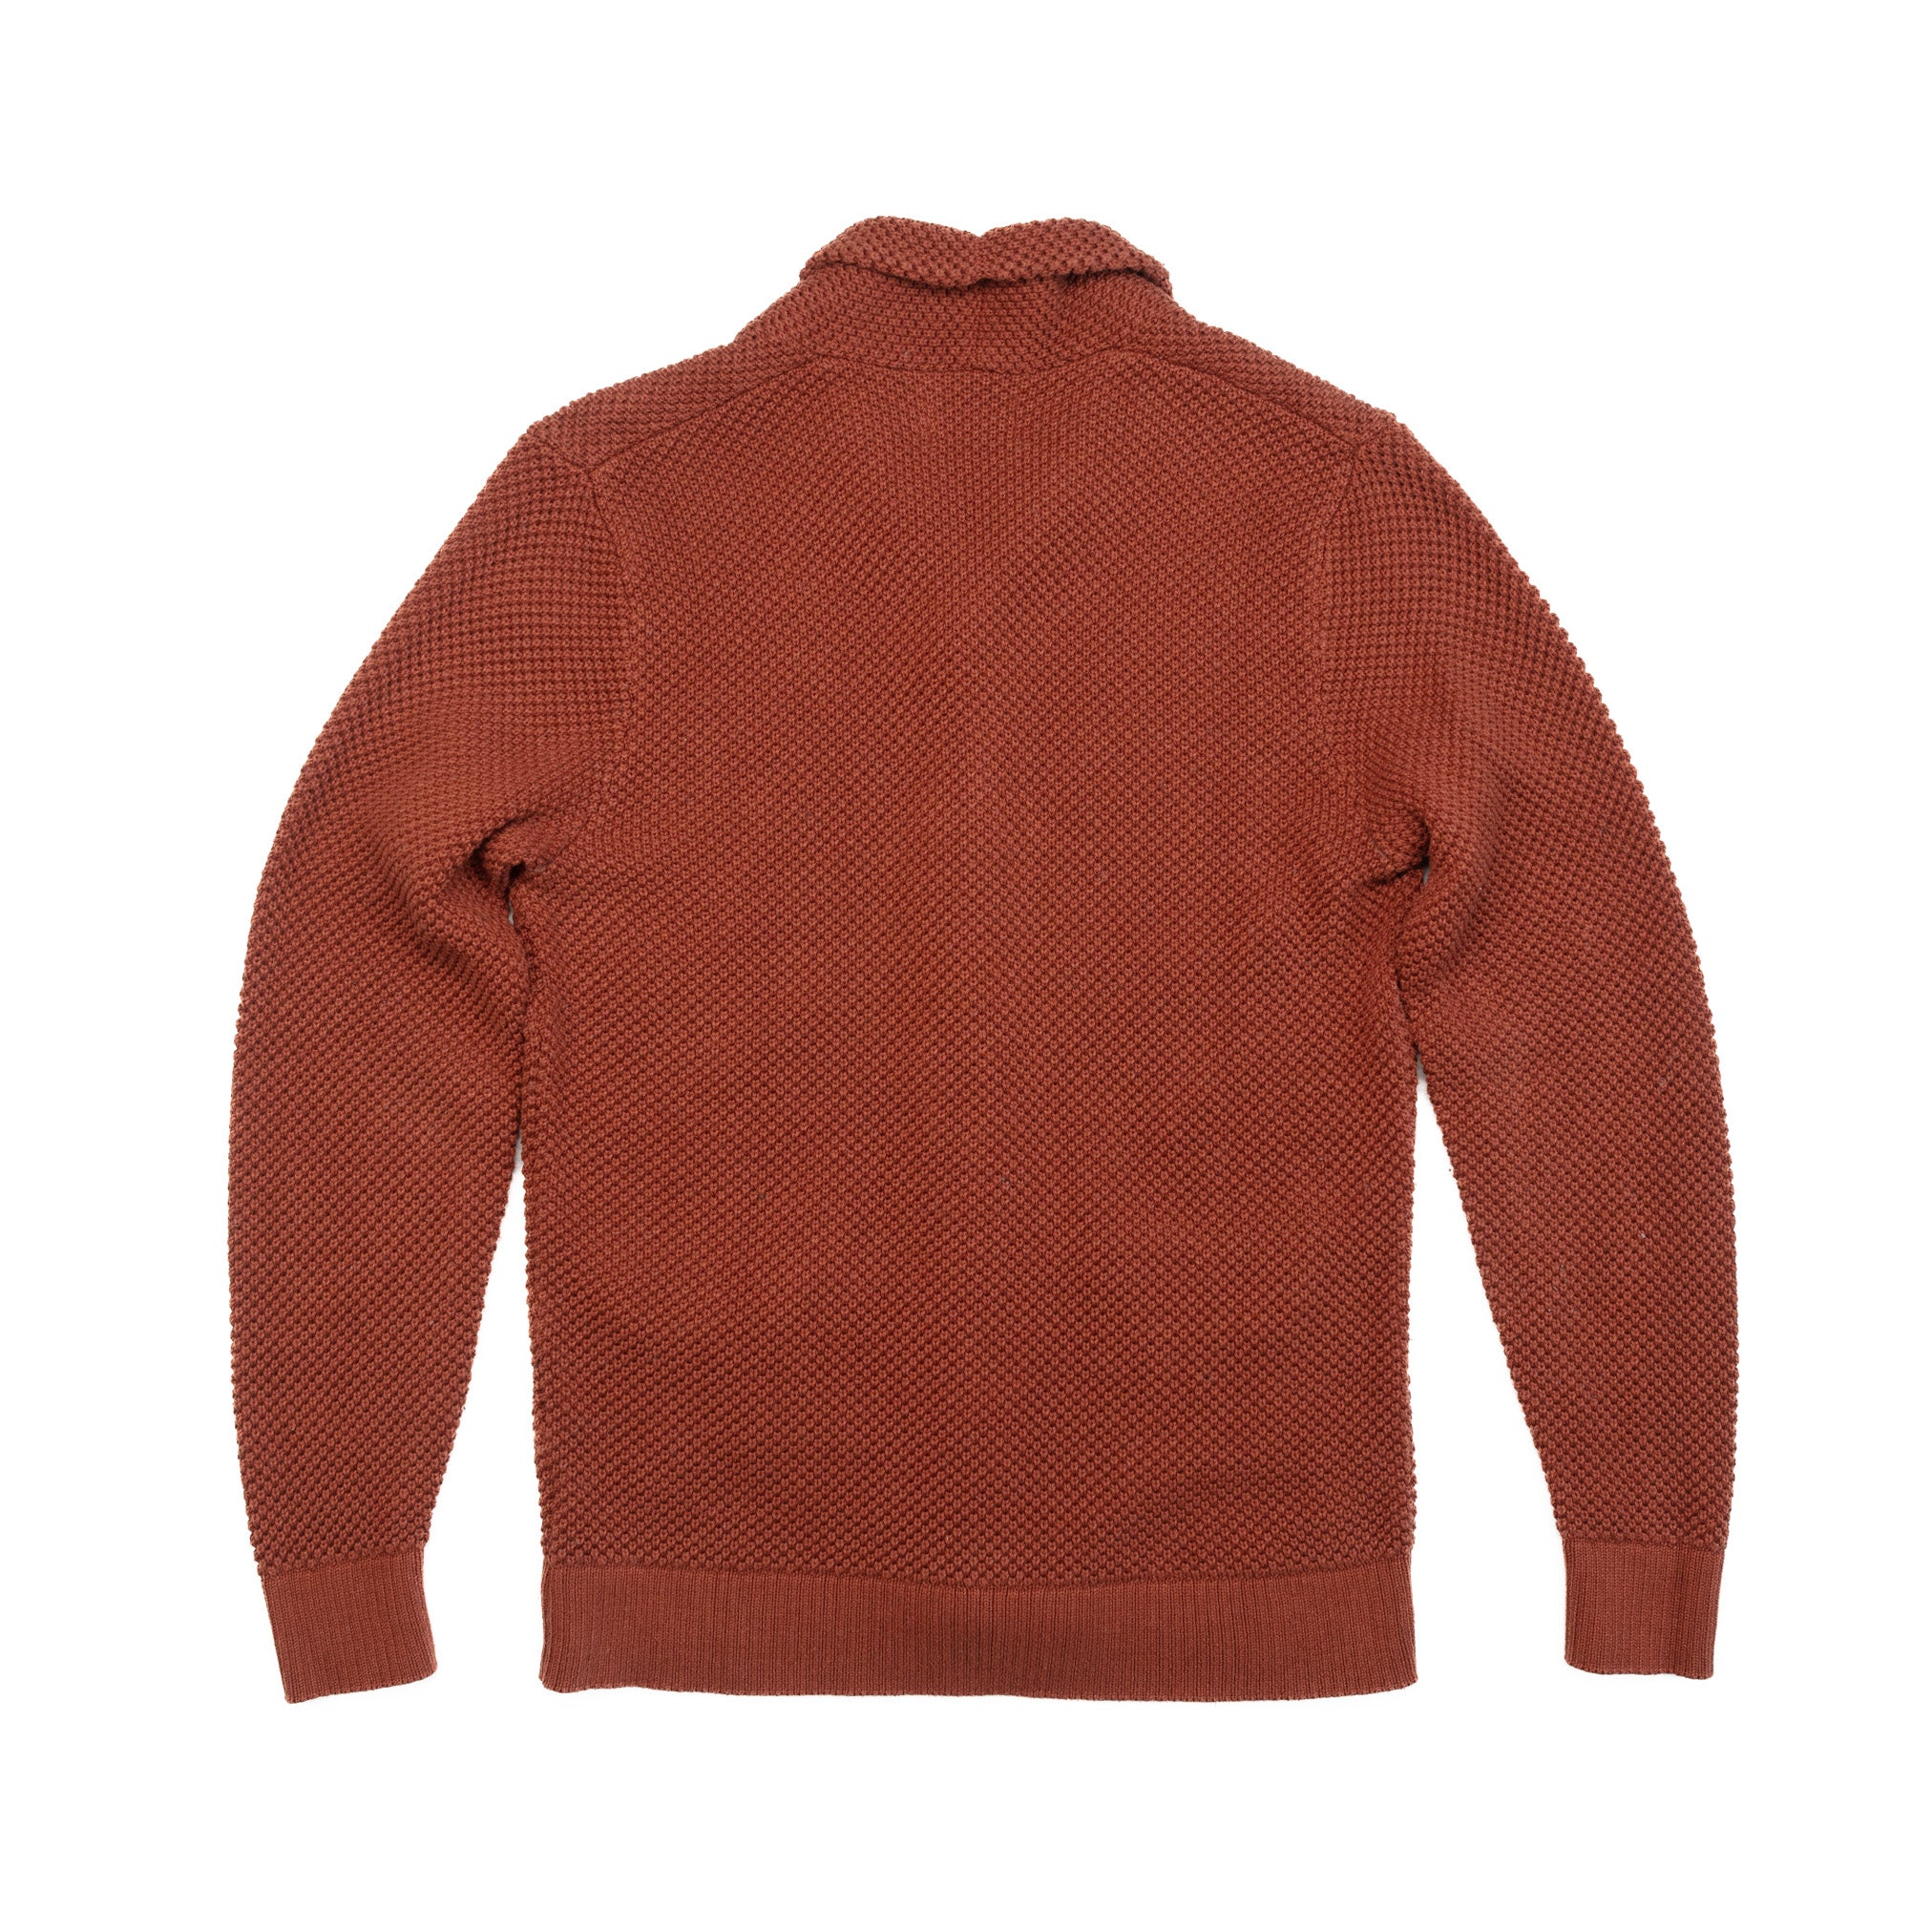 The Crawford Sweater in Rust - M